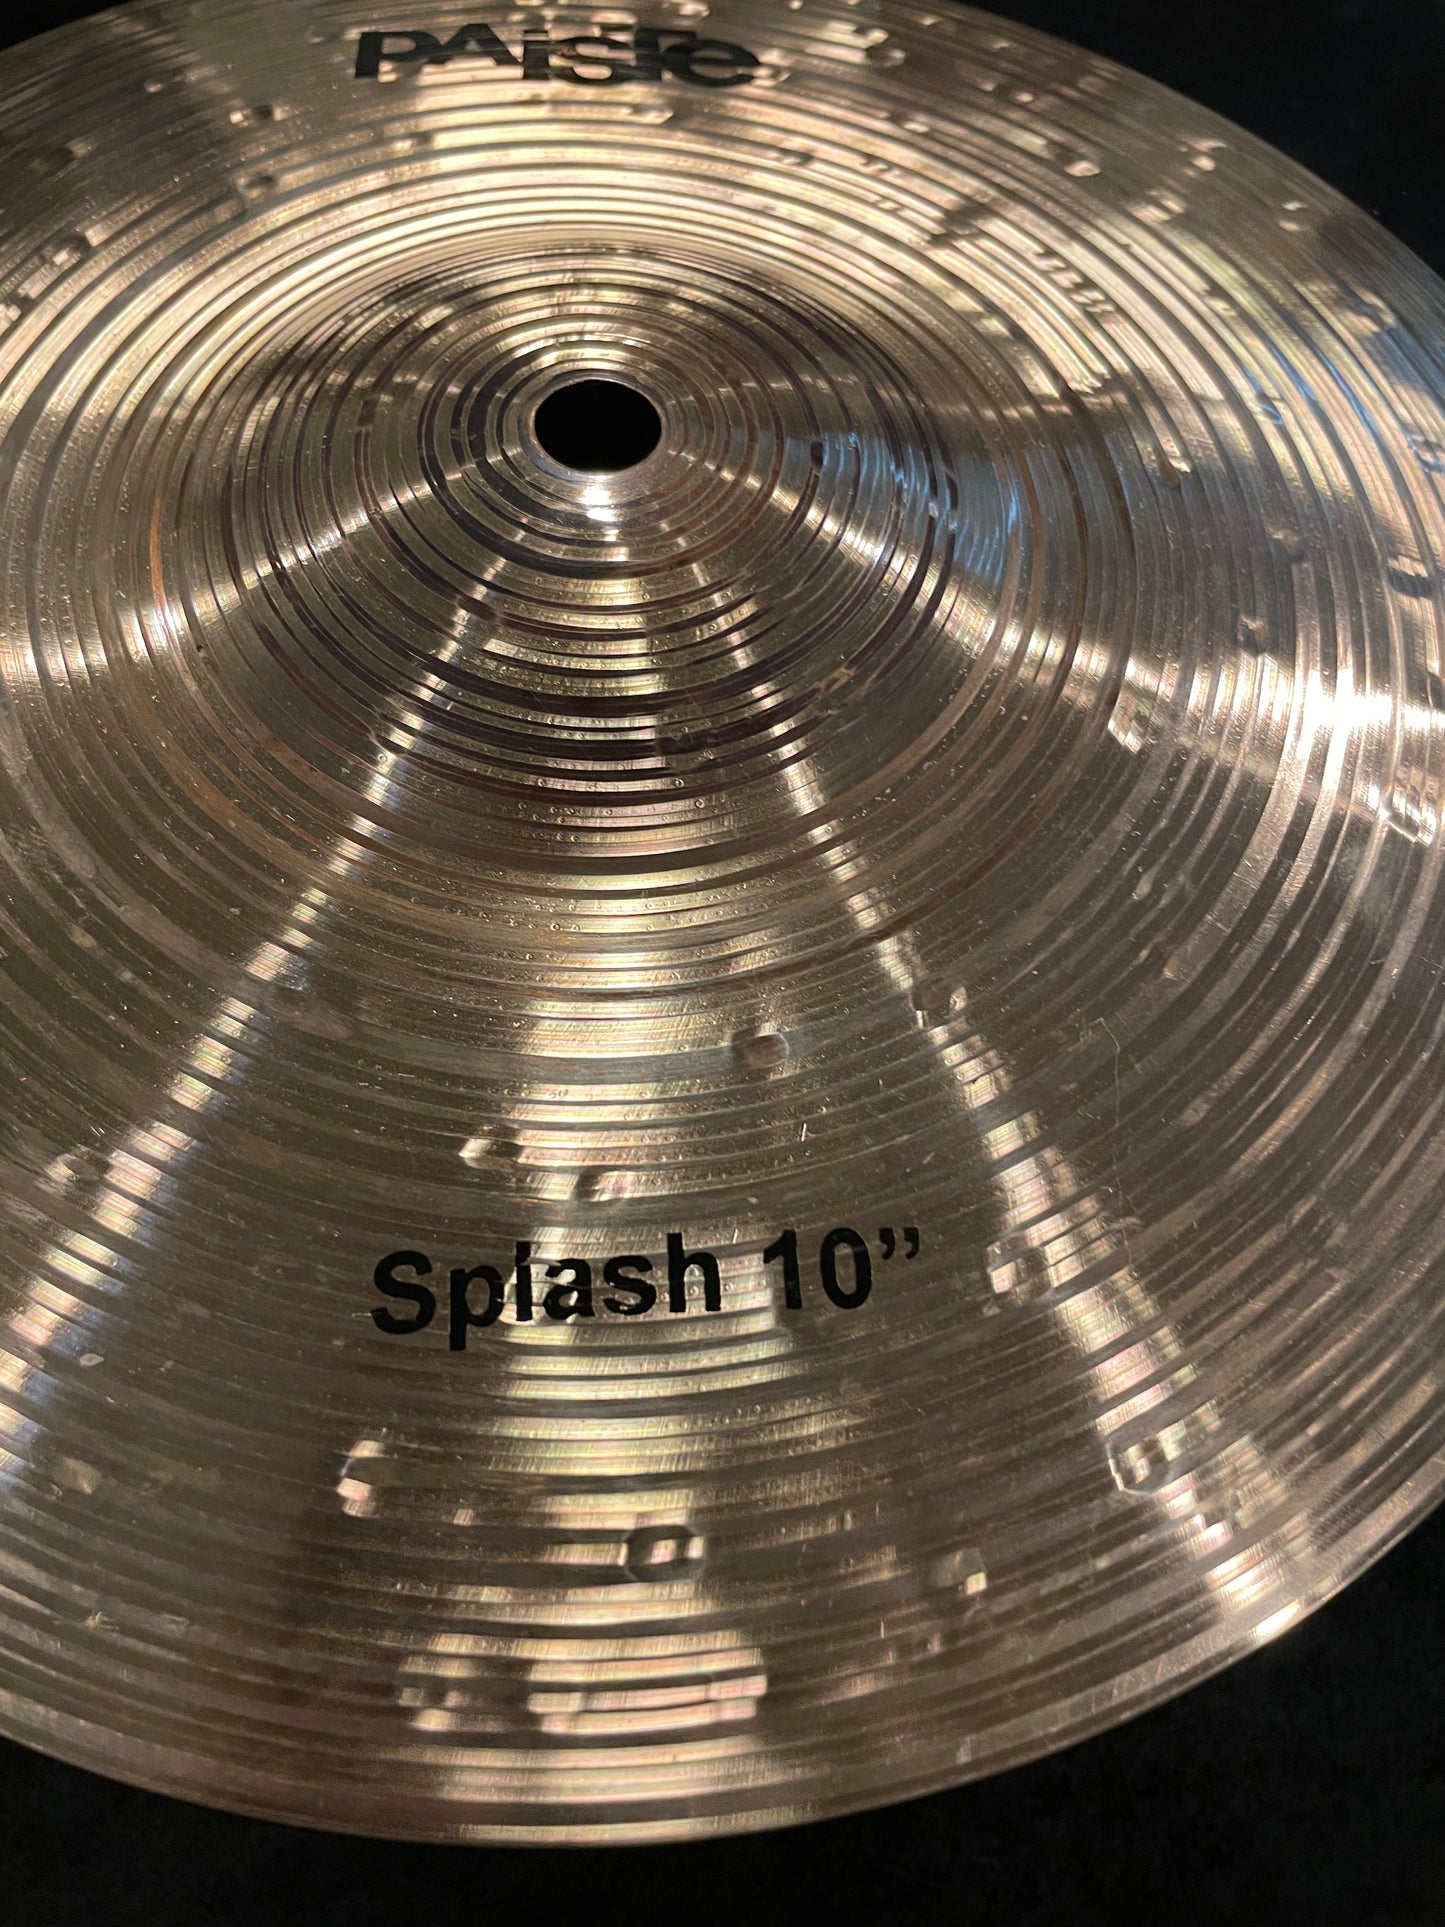 10" Paiste Splash Cymbal 290g